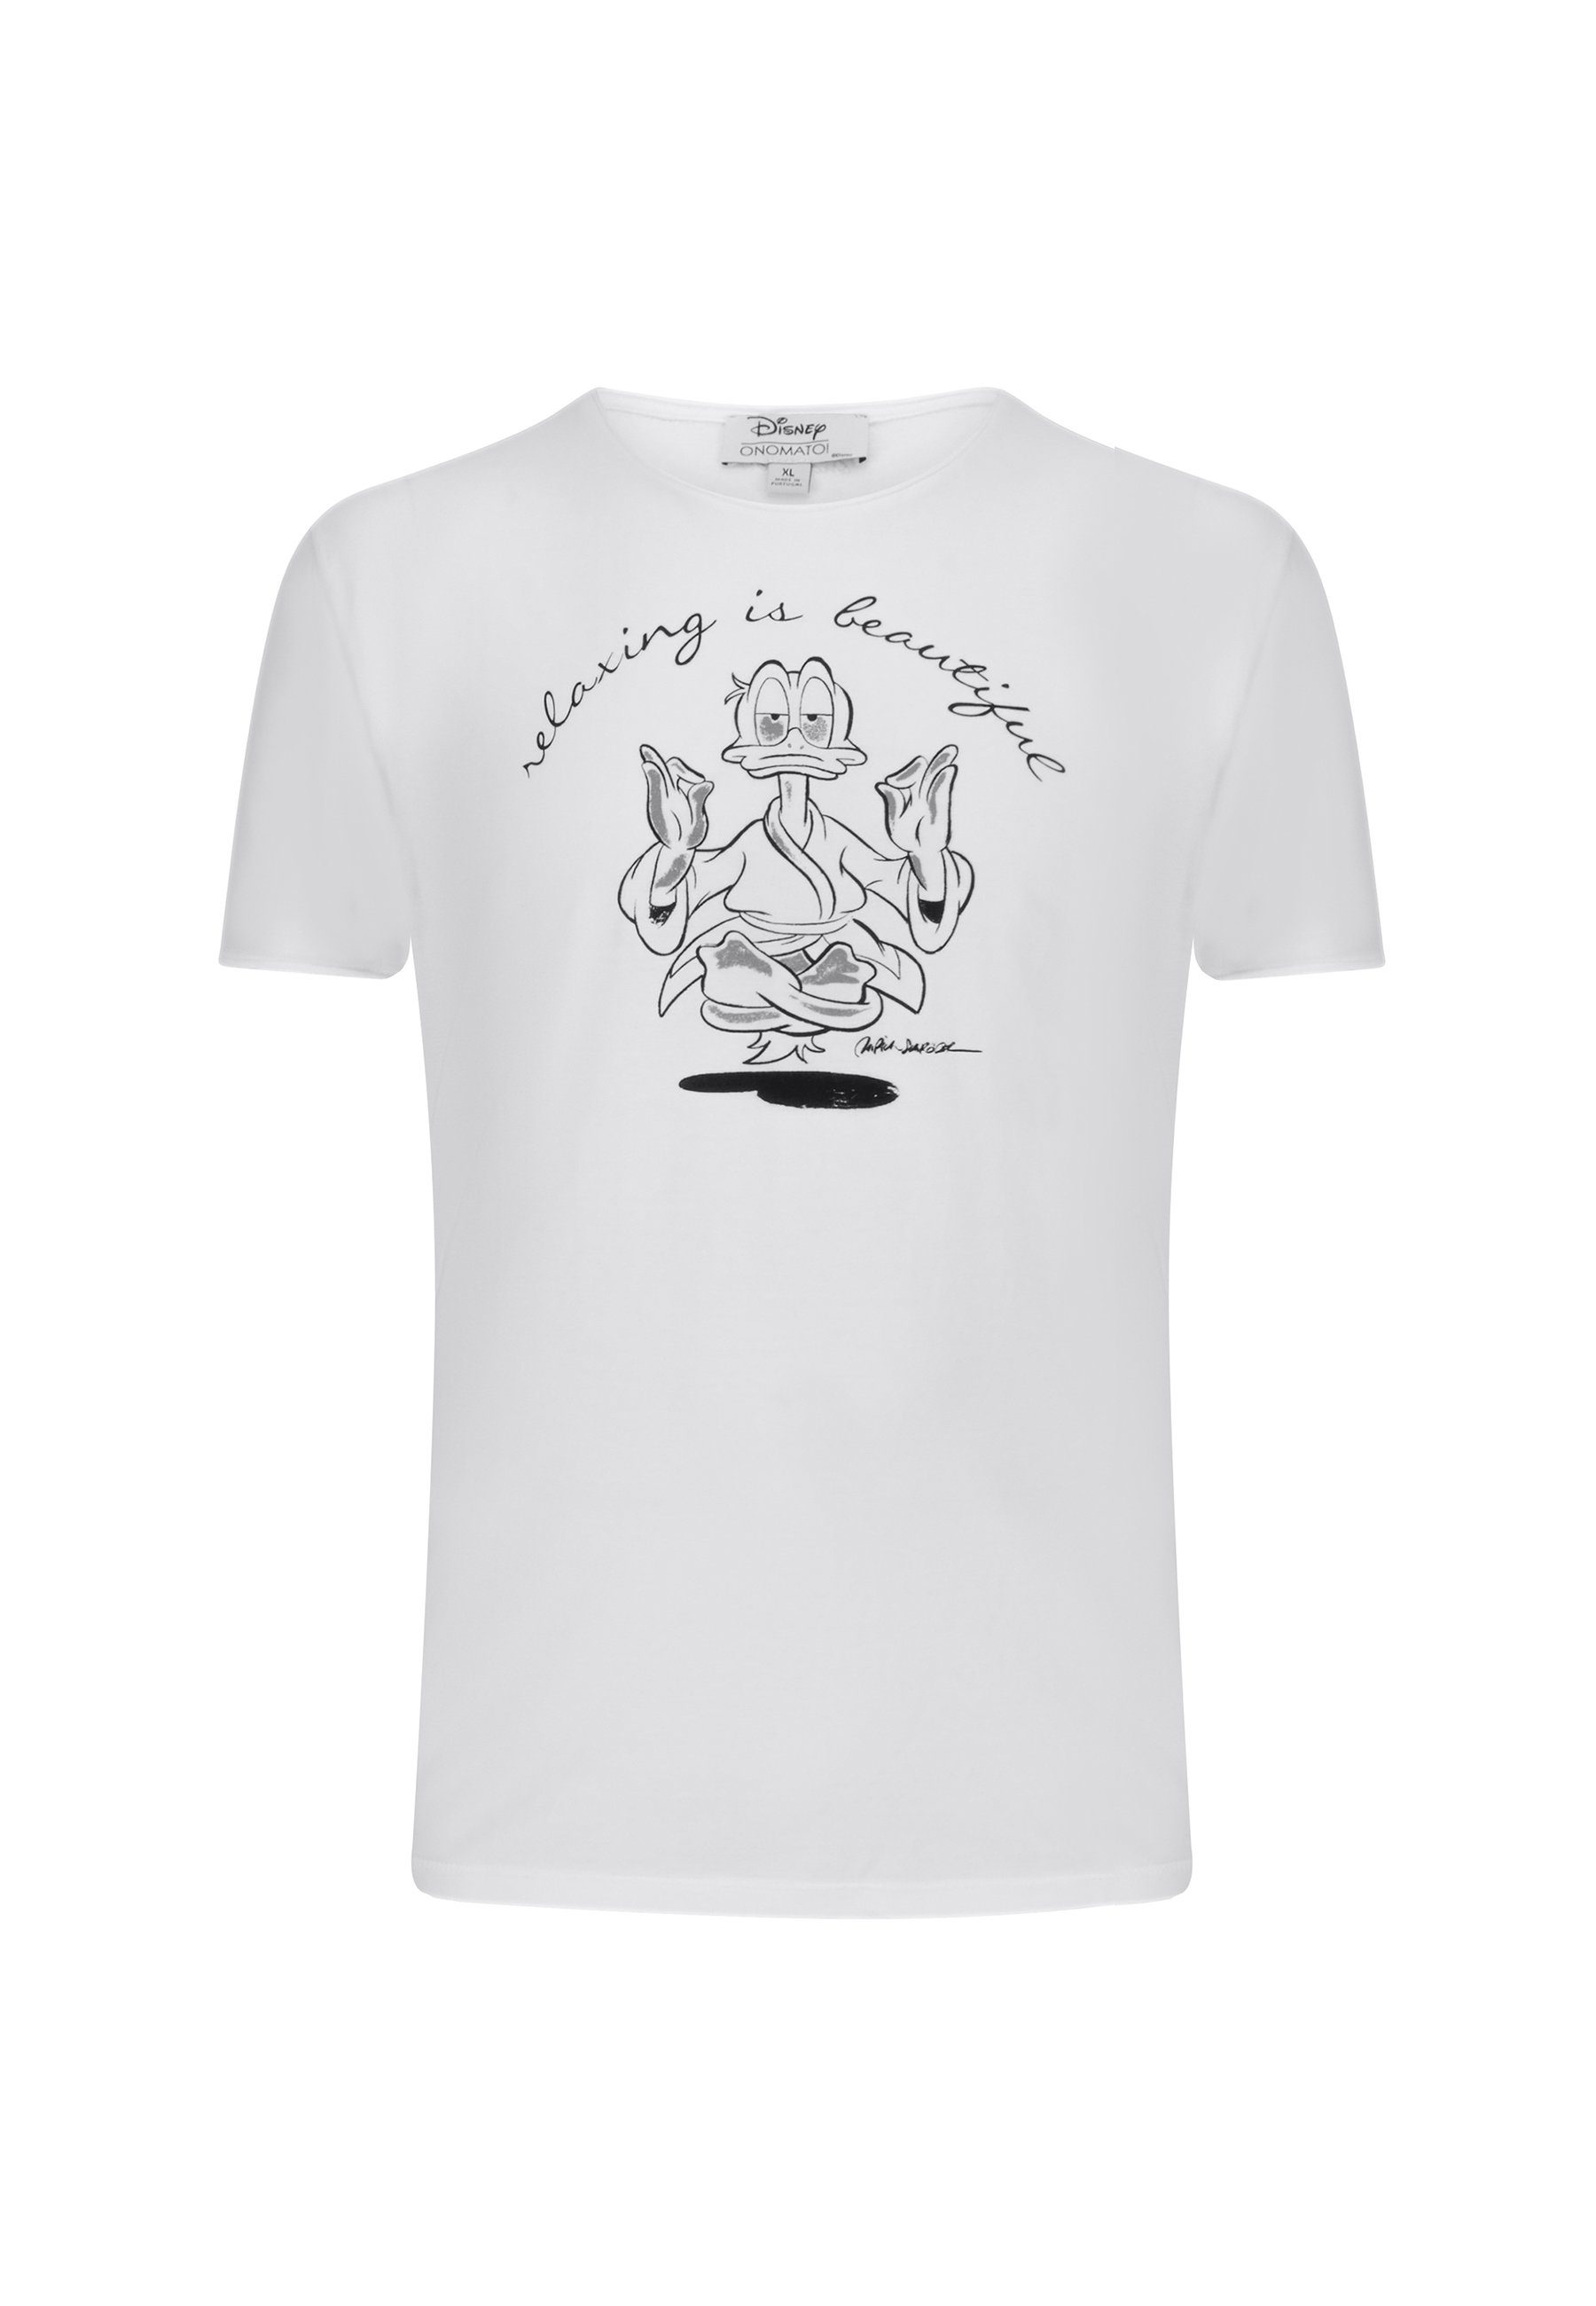 ONOMATO! T-Shirt Donald Duck Herren T-Shirt Kurzarm-Shirt